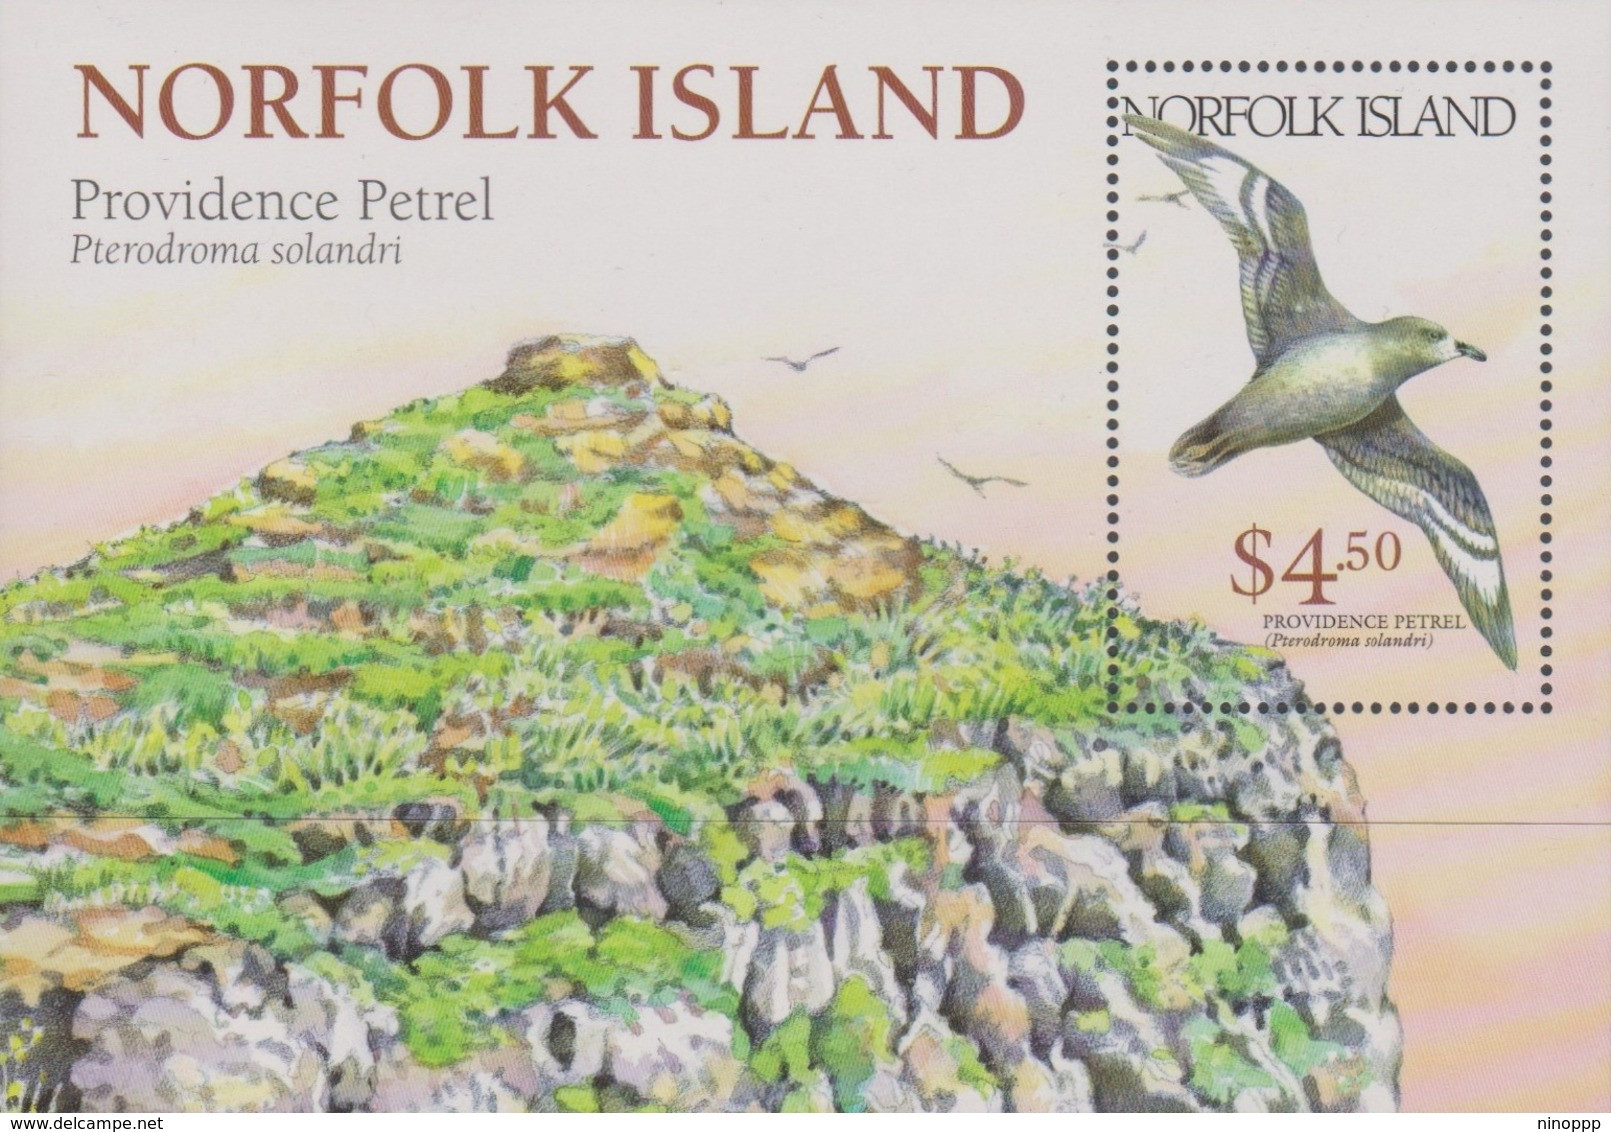 Norfolk Island ASC 689 MS 1999 Providence Petrel, Miniature Sheet, Mint Never Hinged - Norfolk Island